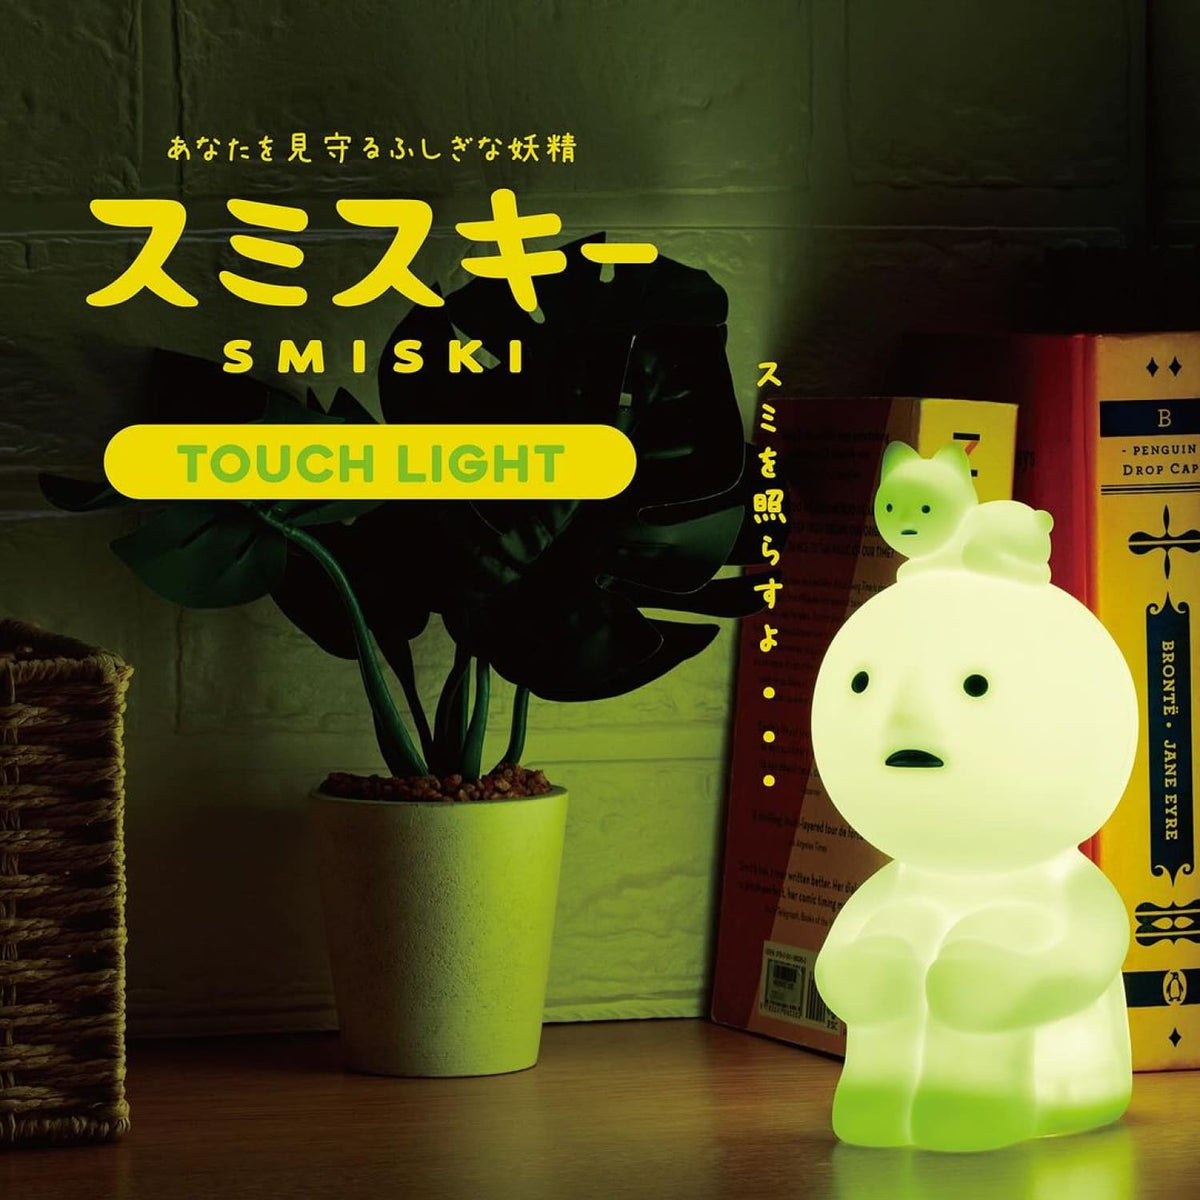 Smiski Touch Light Collectible - Home Decor Kawaii Made